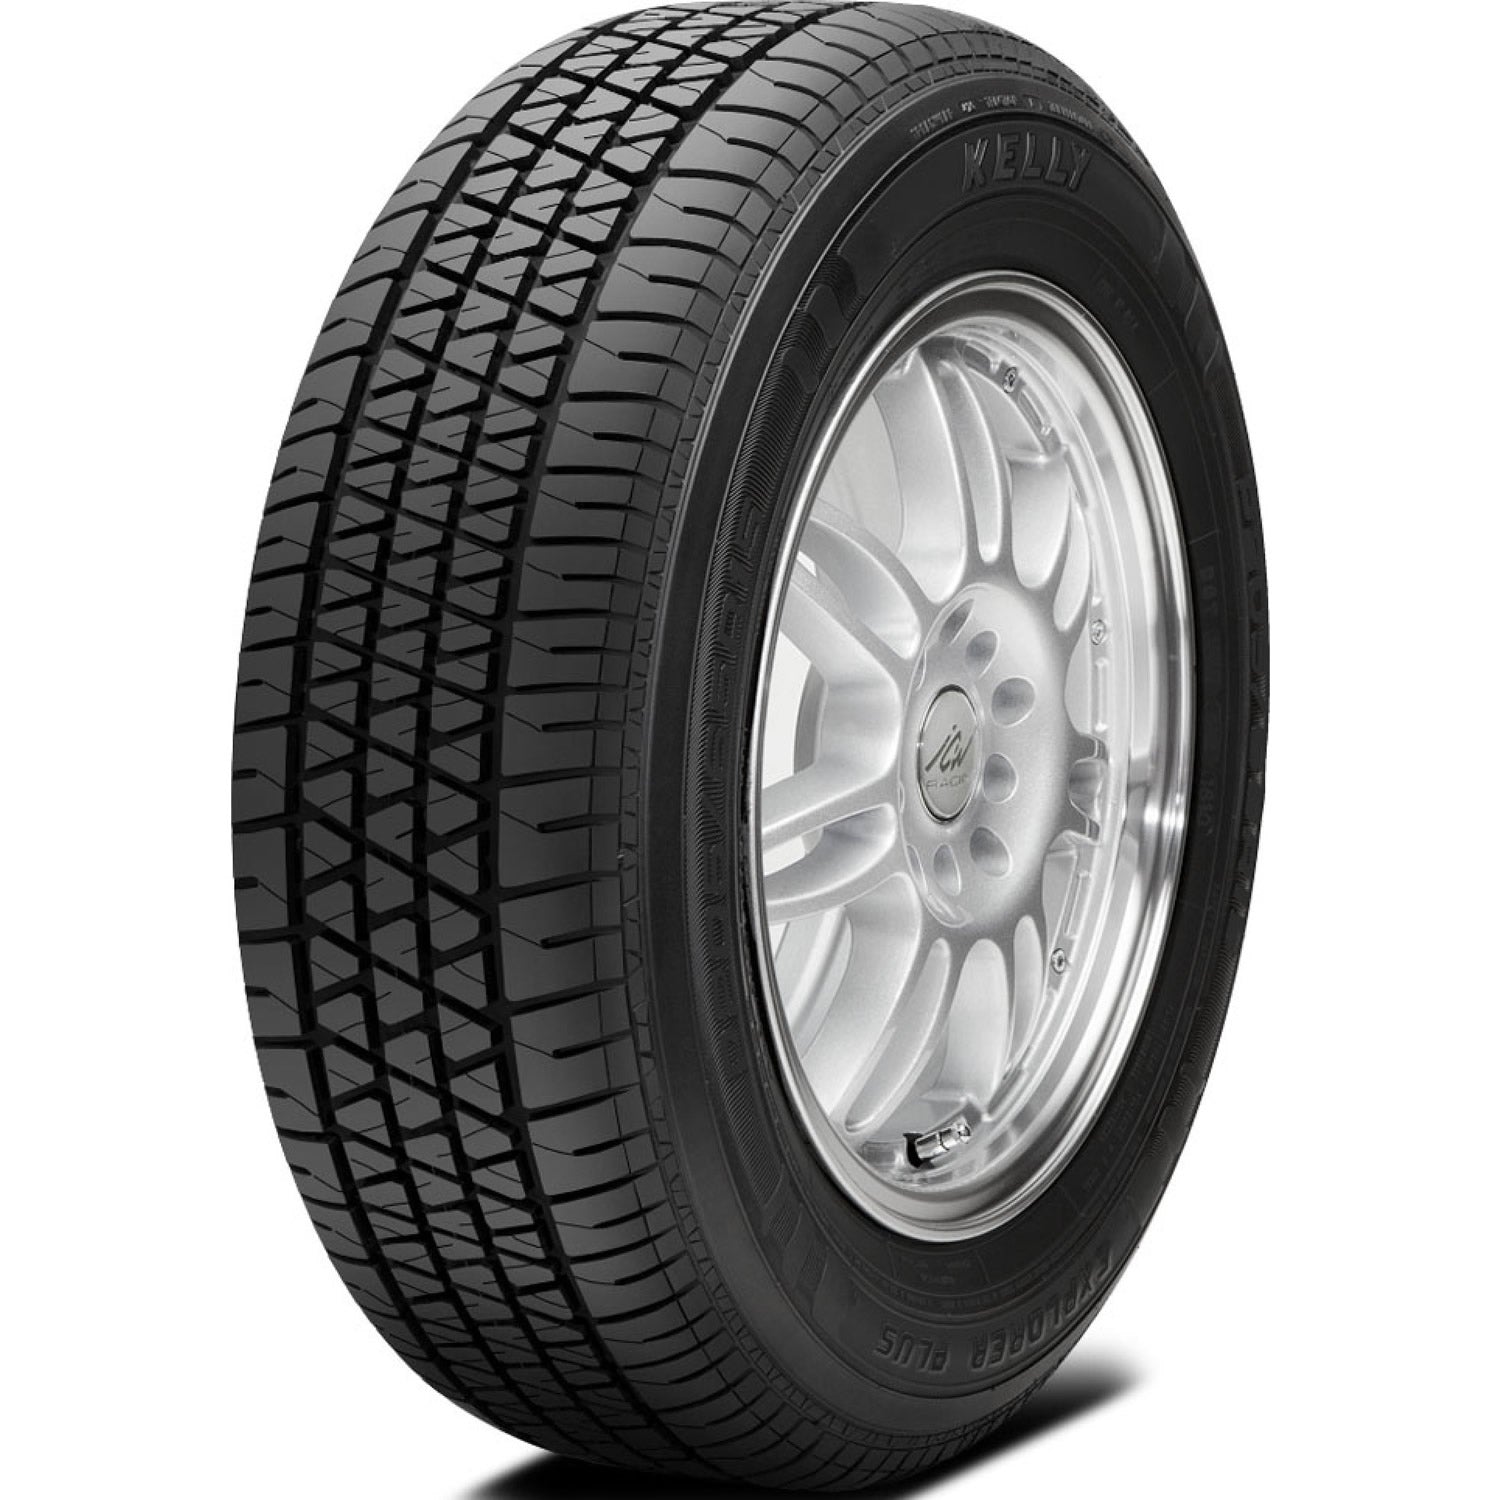 KELLY EXPLORER PLUS 205/65R16 (26.5X8.1R 16) Tires